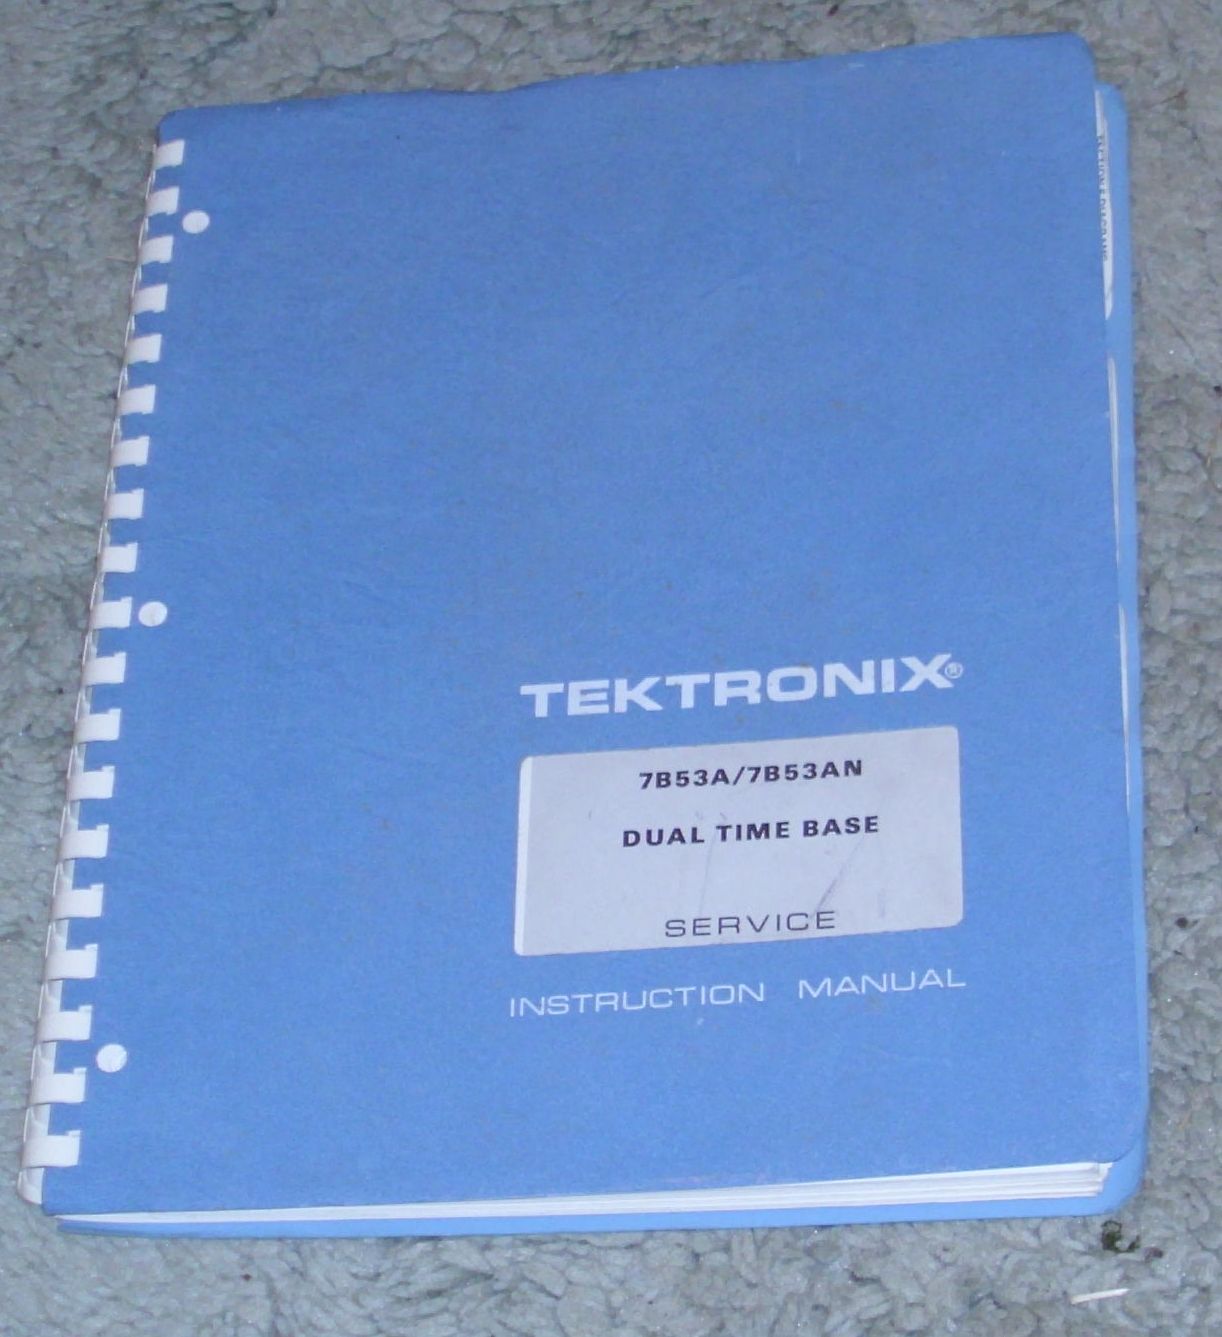 MANUAL Tektronix 7B53 Dual Time Base